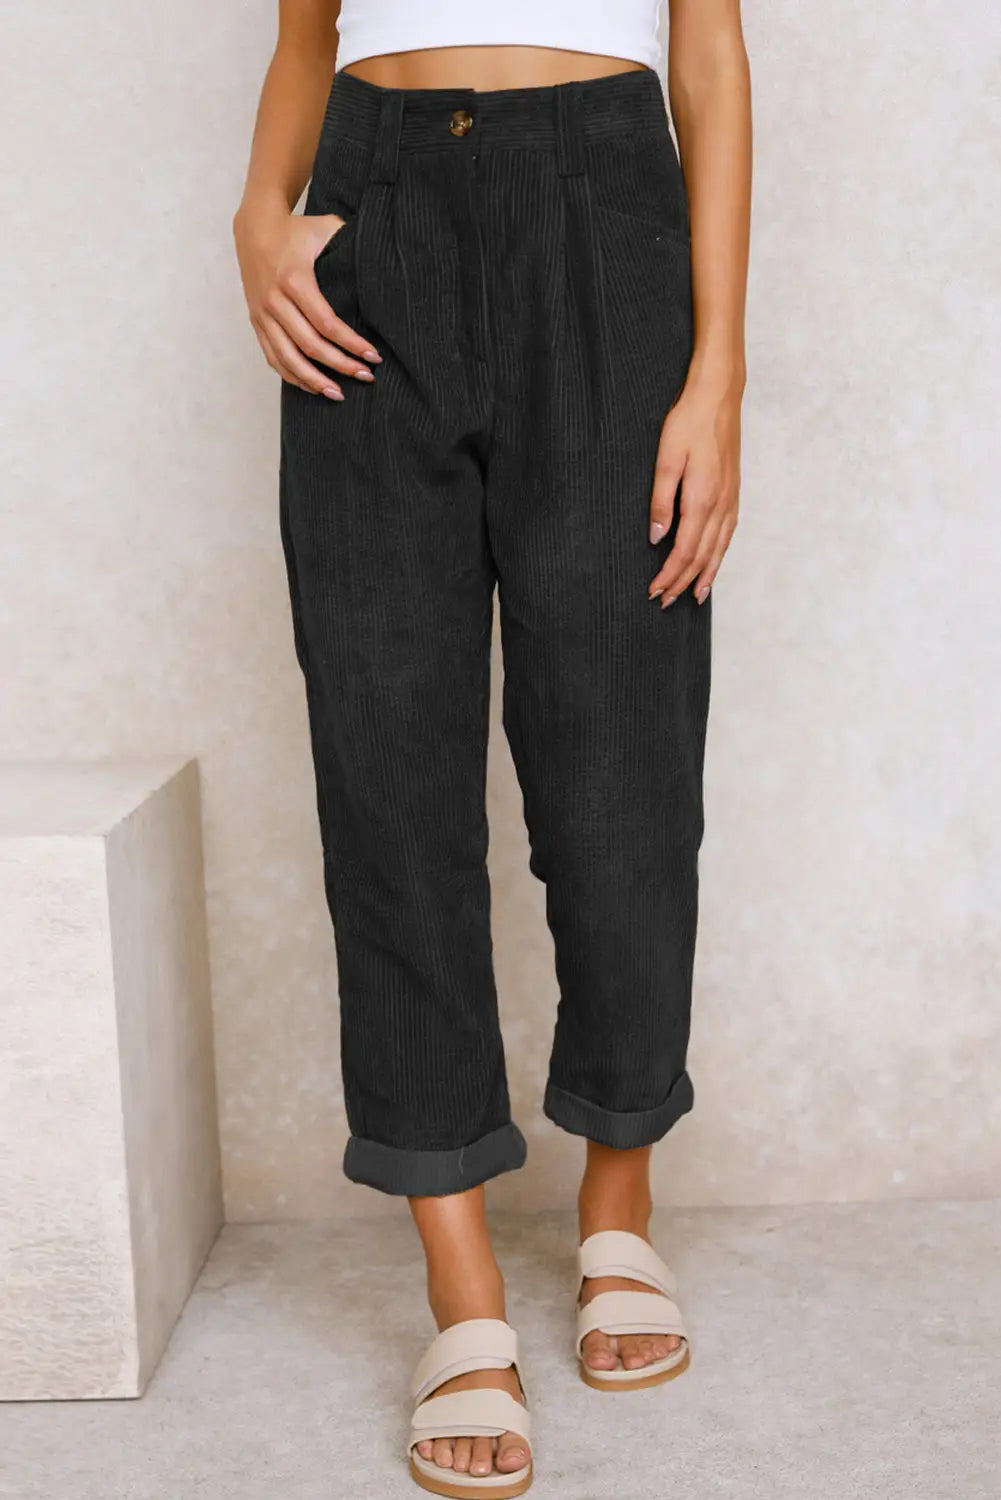 Gray corduroy high waist straight leg pants - black / 8 / 100% cotton